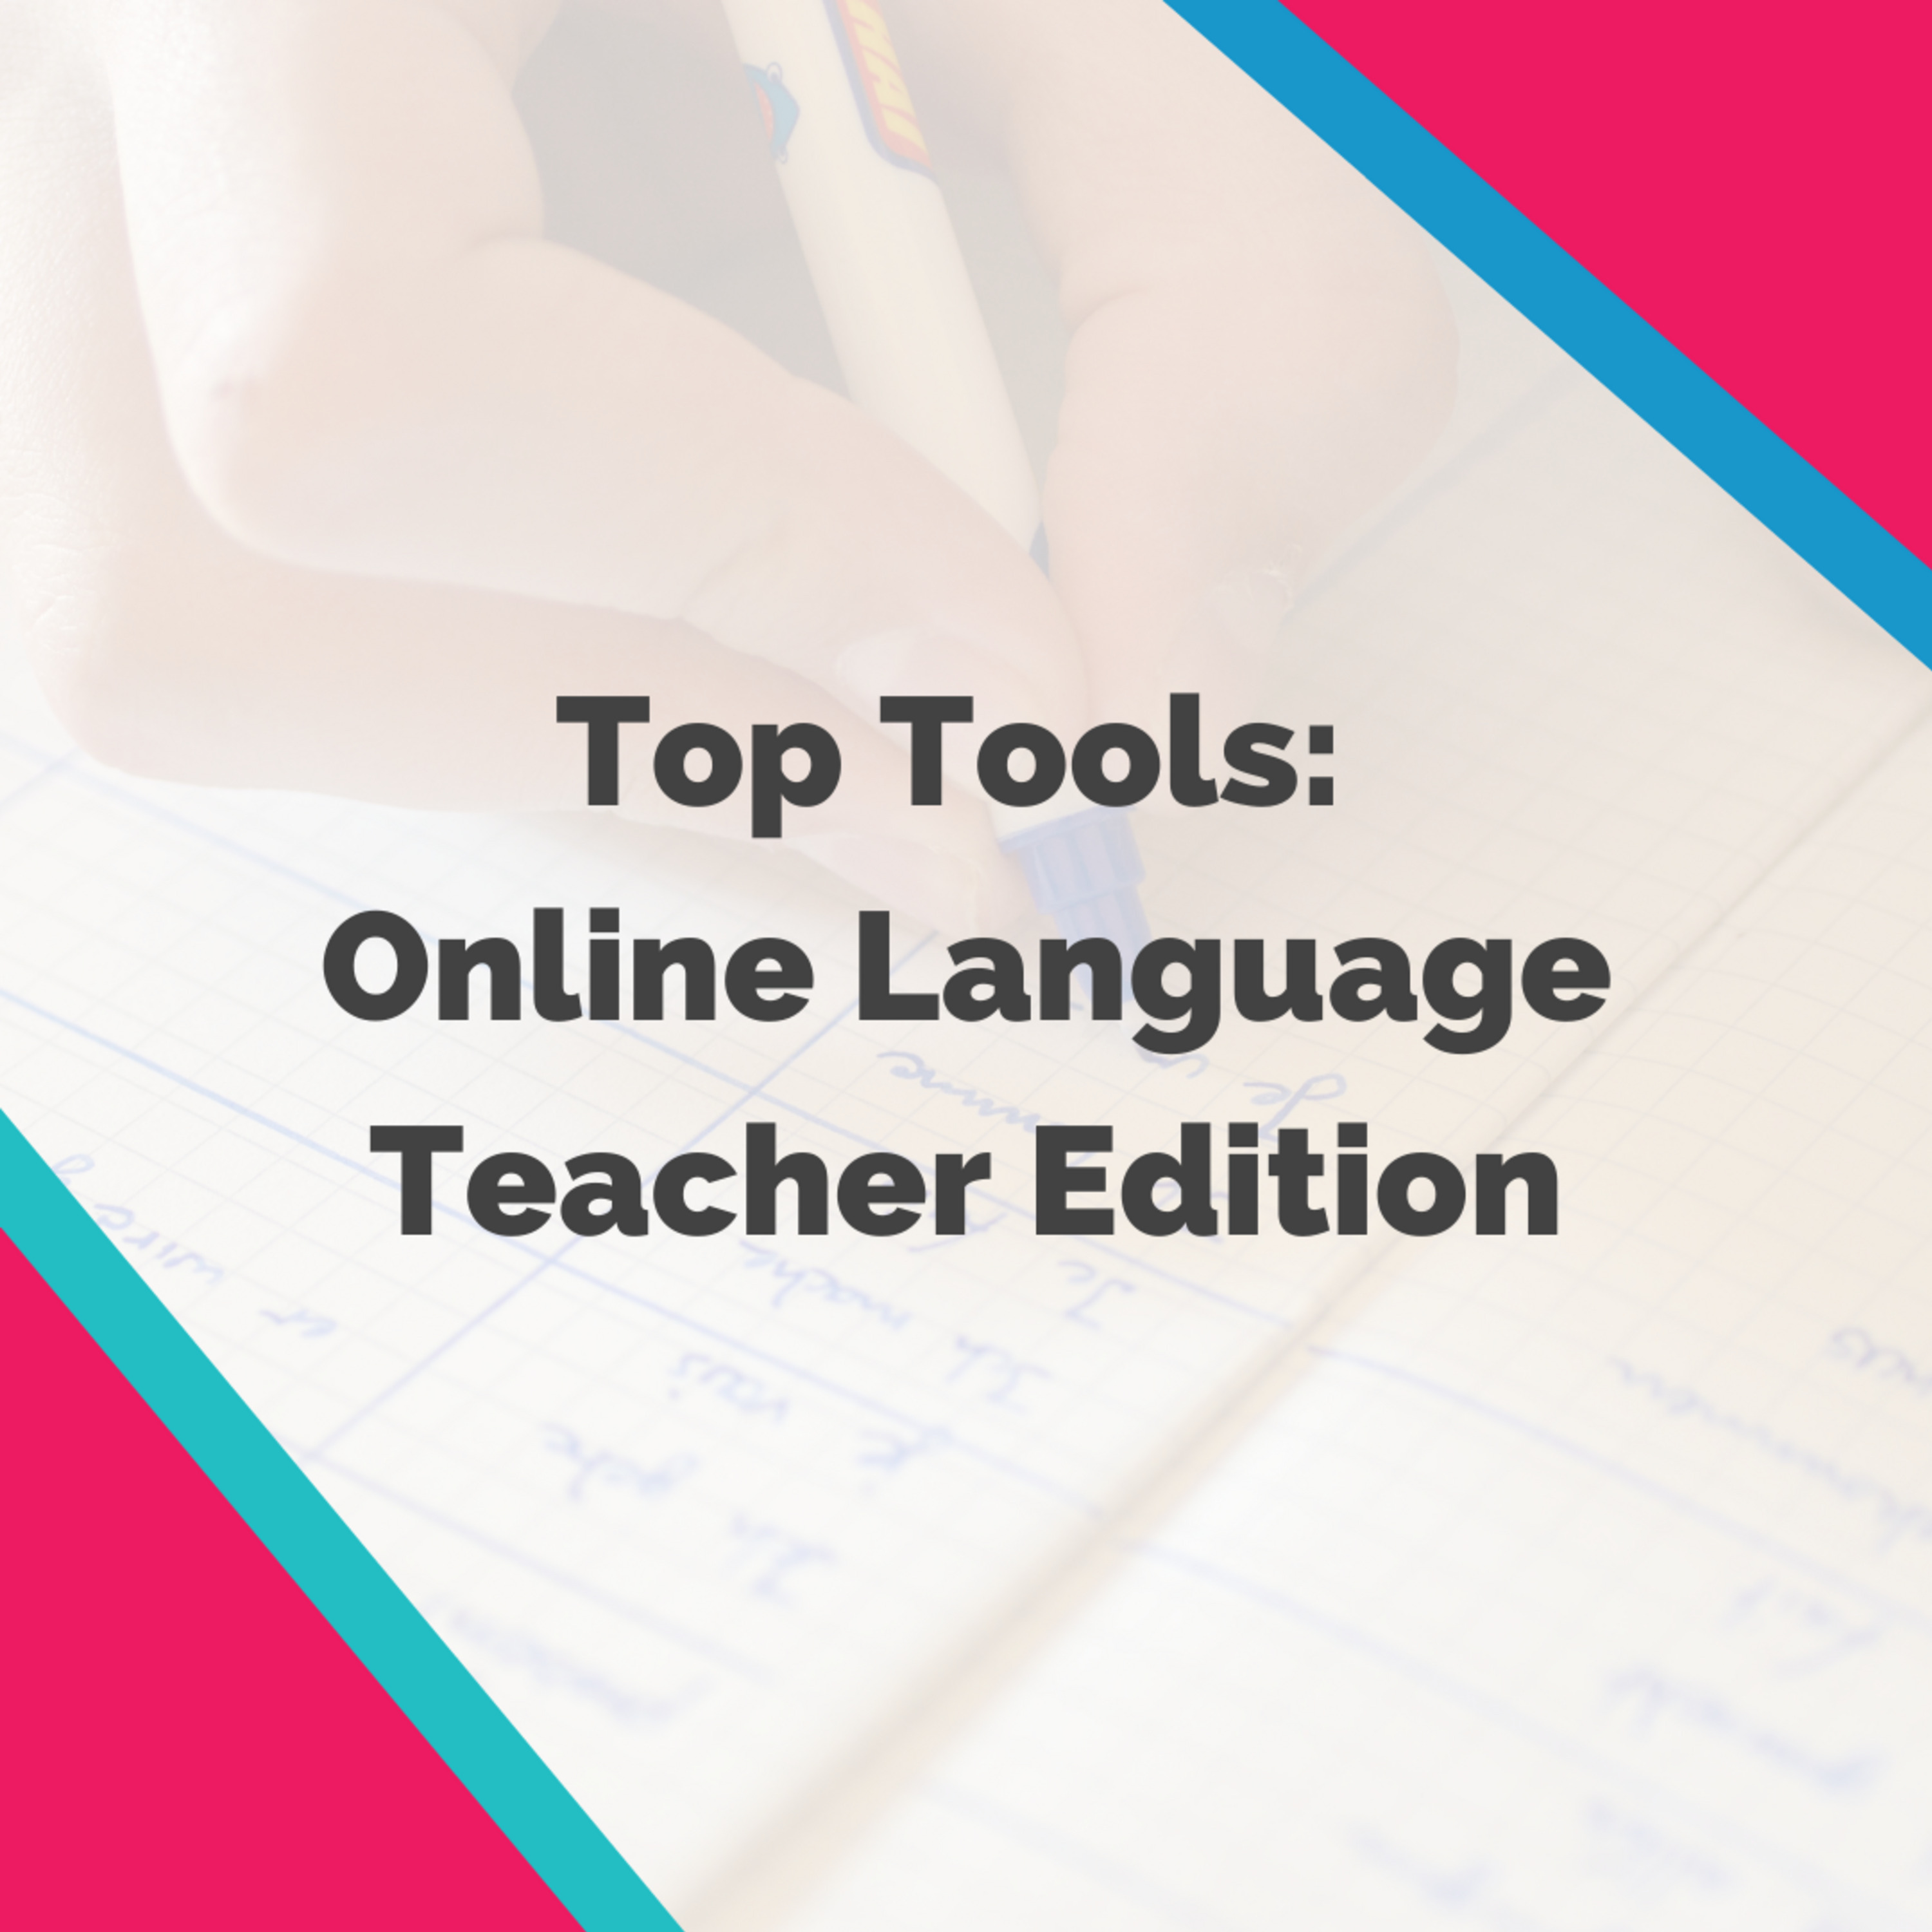 Top Tools: Online Language Teacher Edition